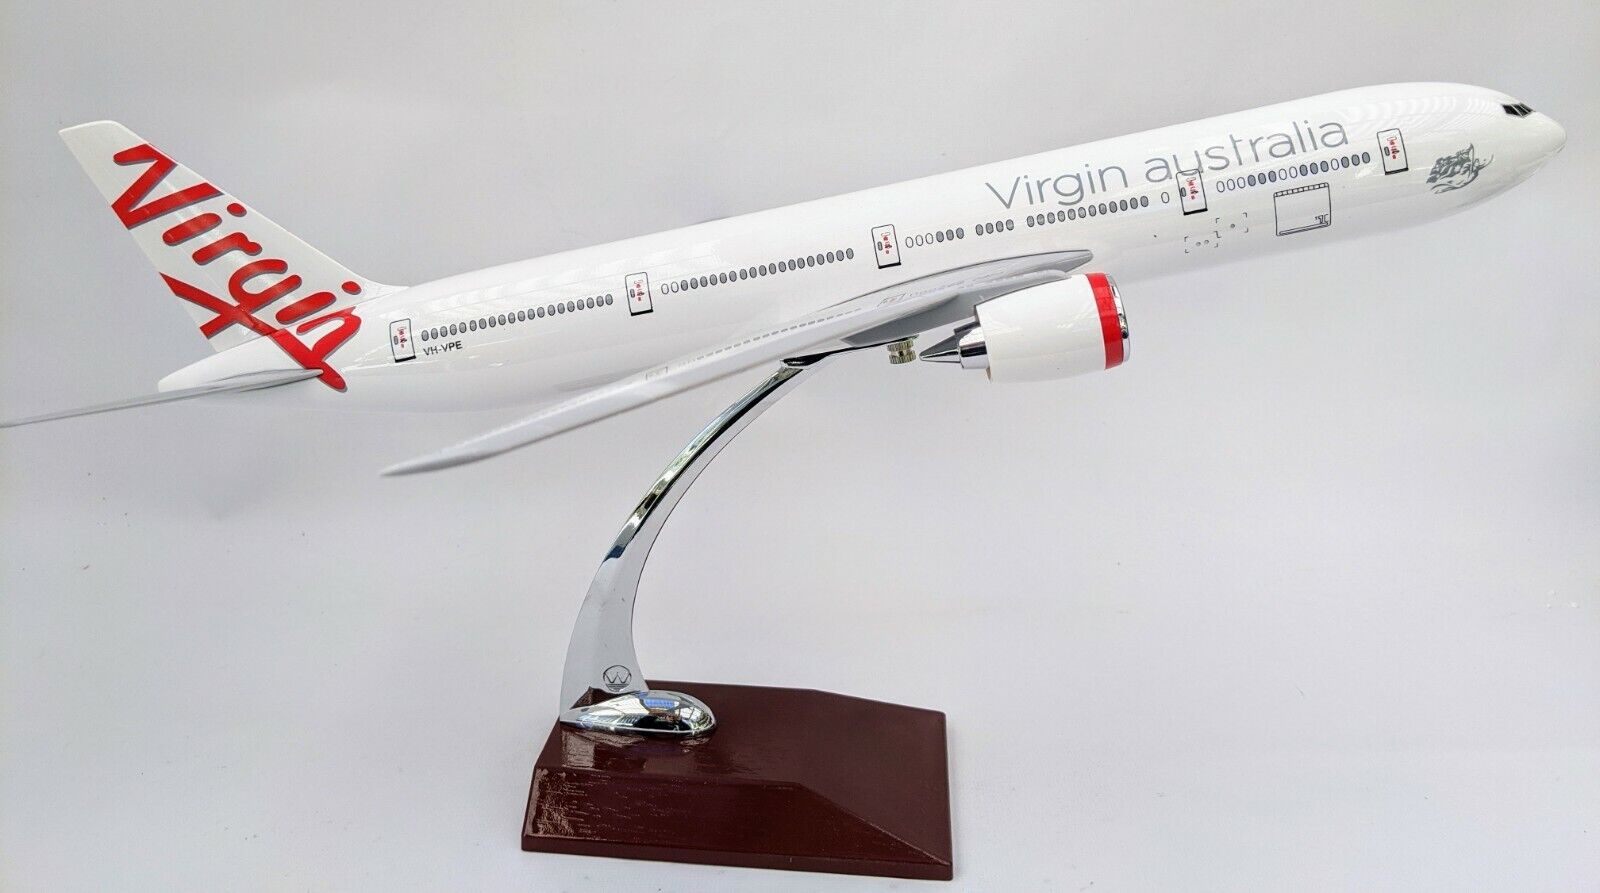 Virgin Australia 🇦🇺 Airplane Large Plane Model 777 LED Model Airplane 45Cm